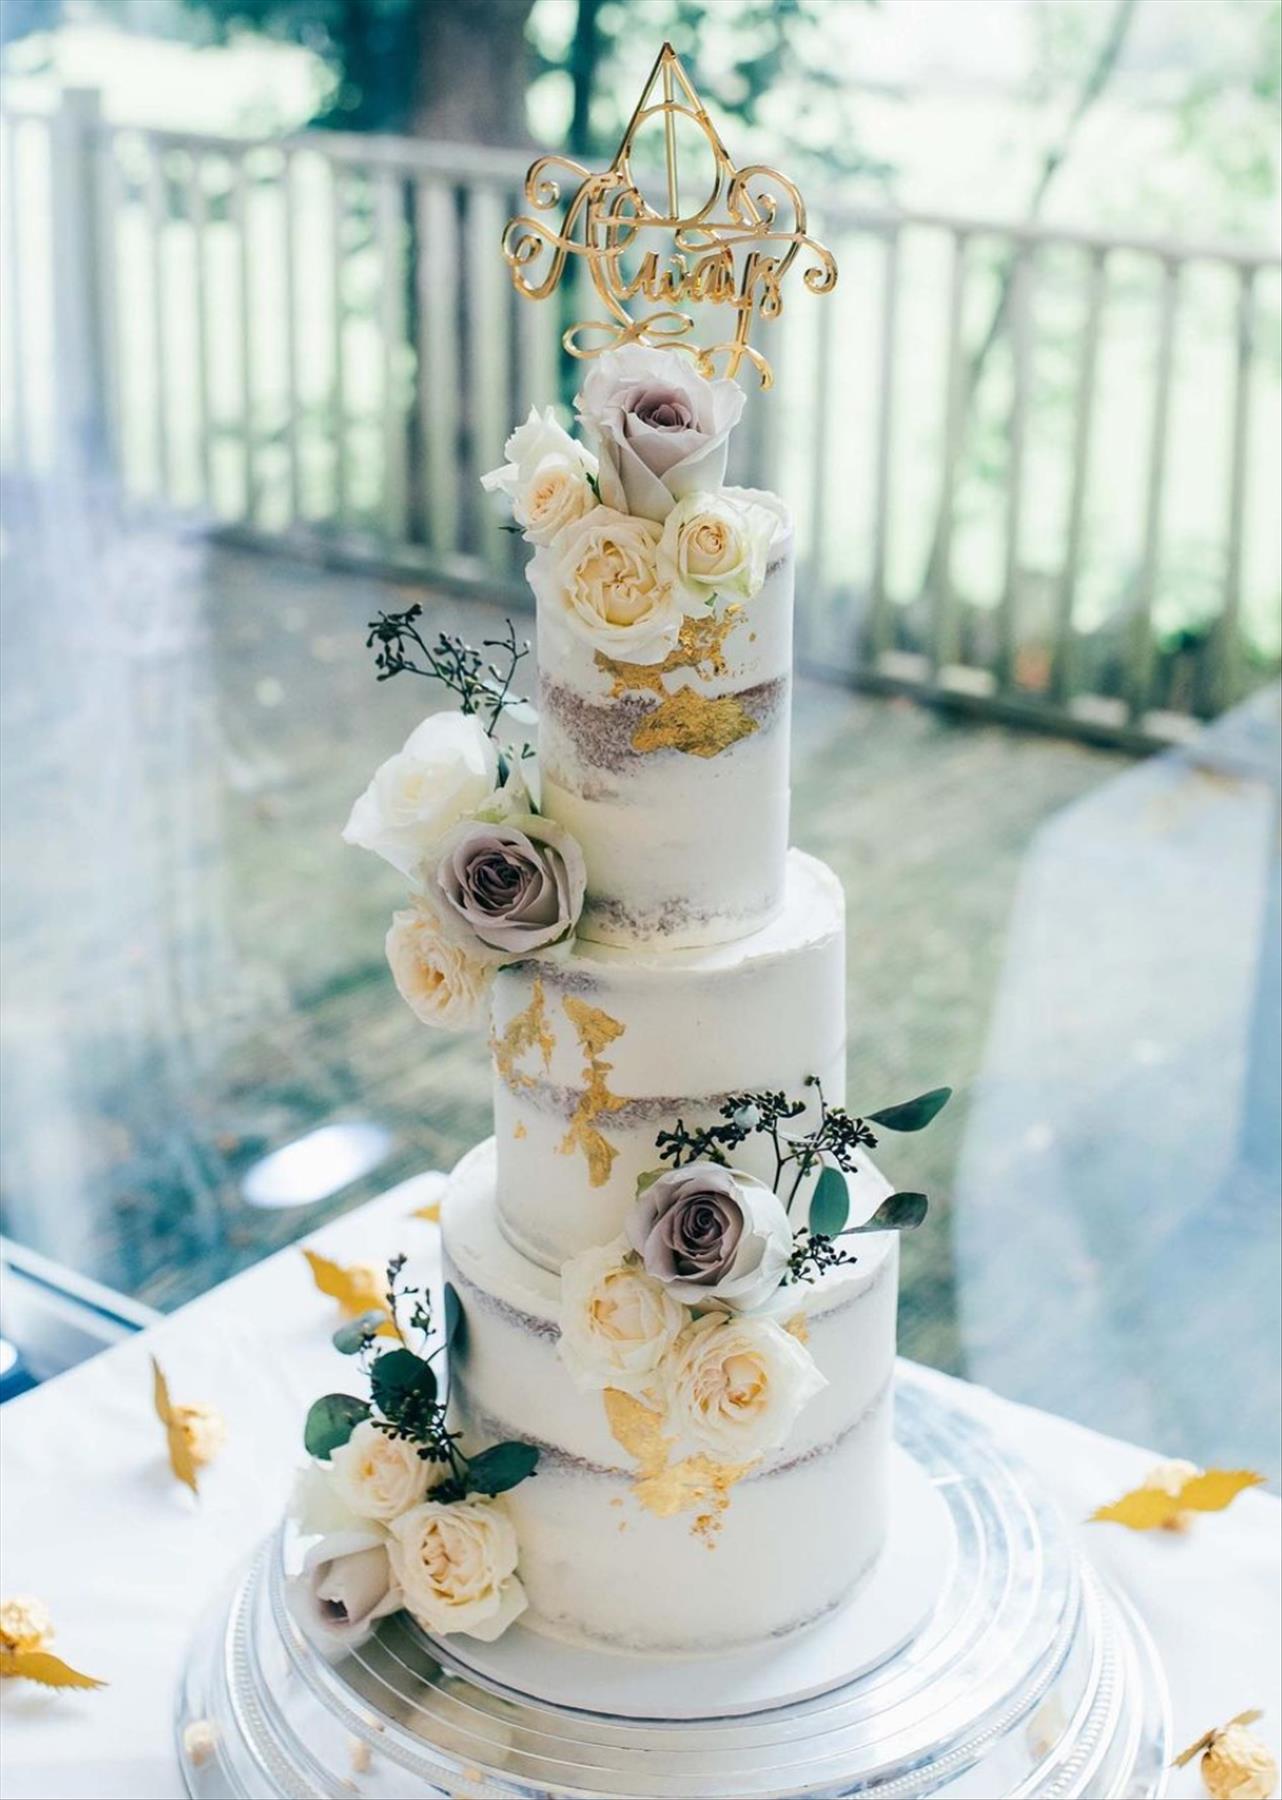 Romantic Winter wedding cakes ideas for Christmas wedding 2021